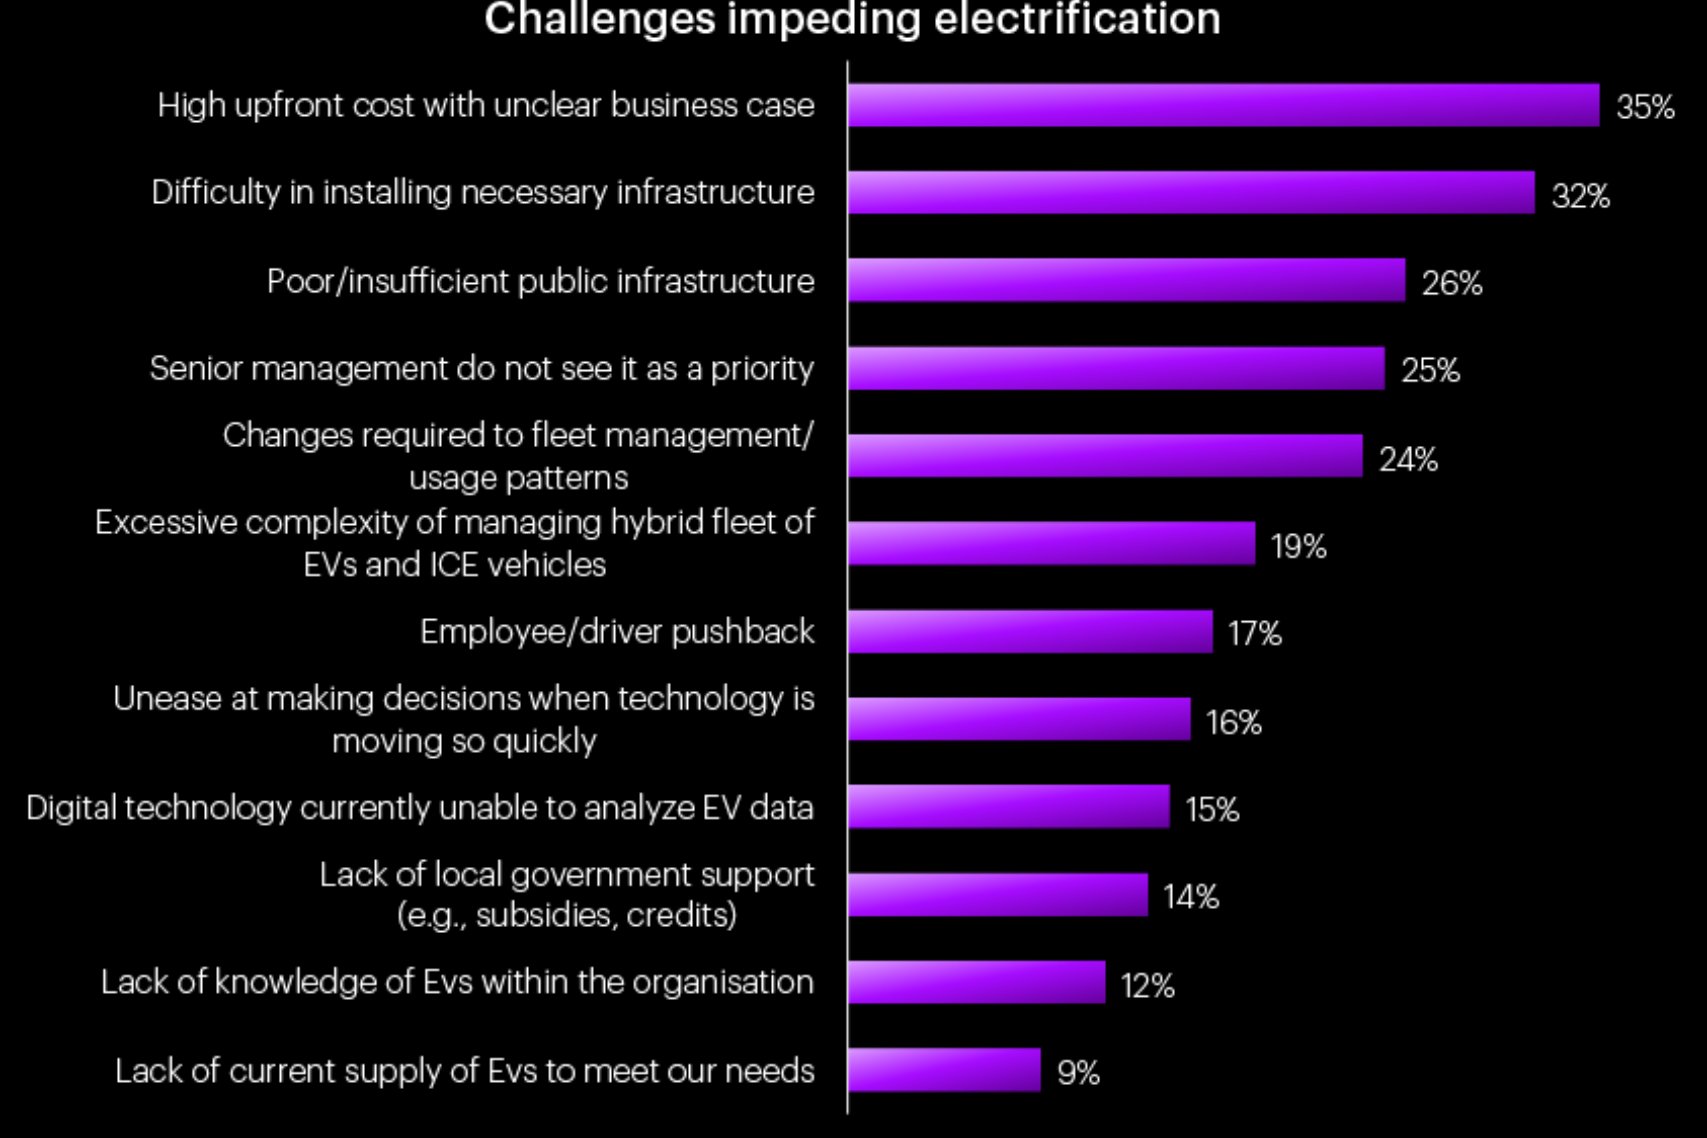 Challenges impeding fleet electrification.